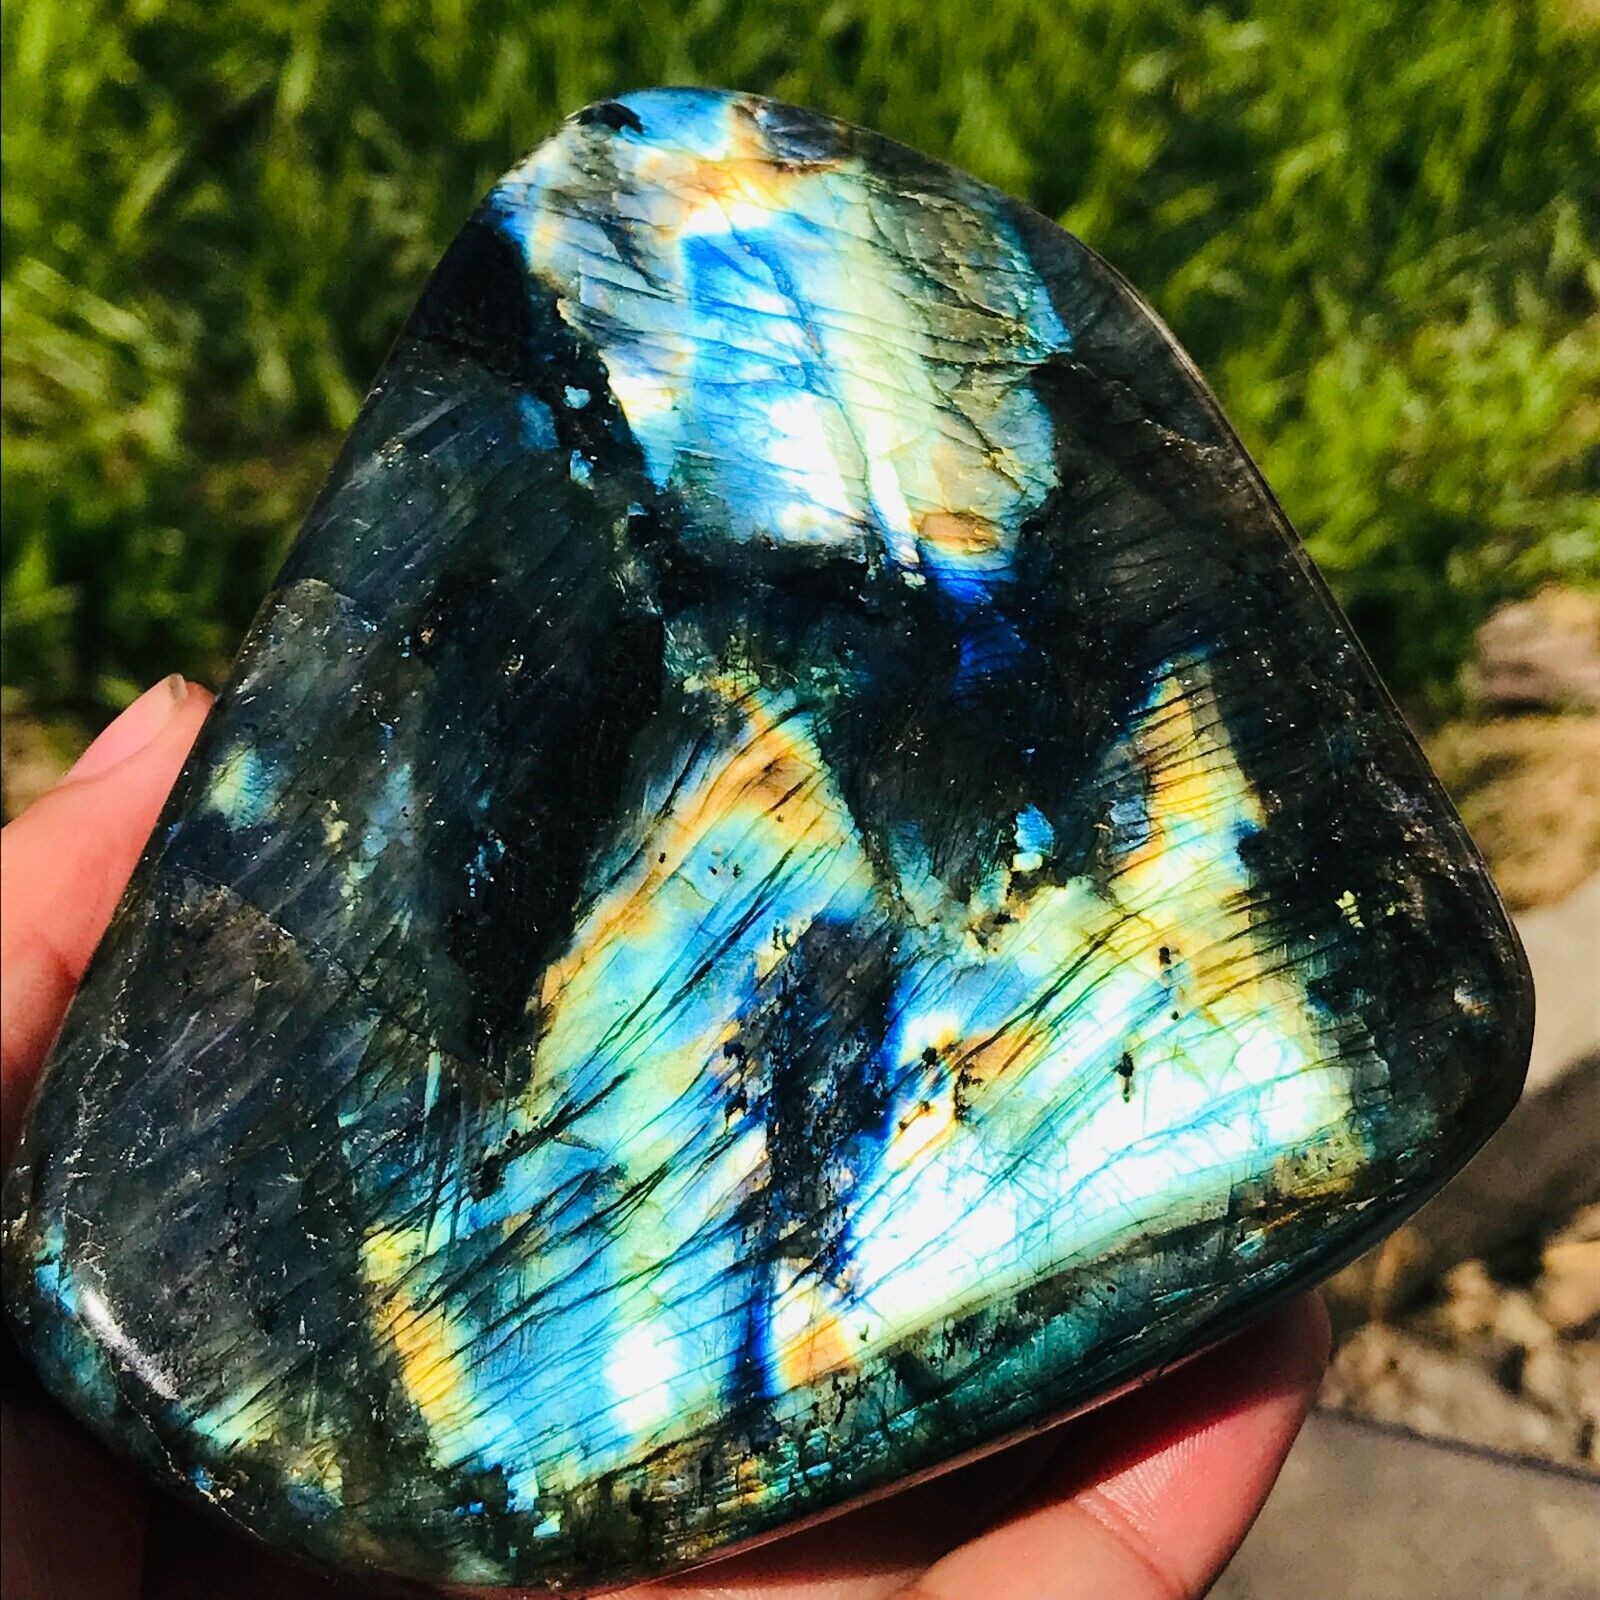 856g Natural Blue Gorgeous Labradorite Quartz Crystal Display Specimen Healing